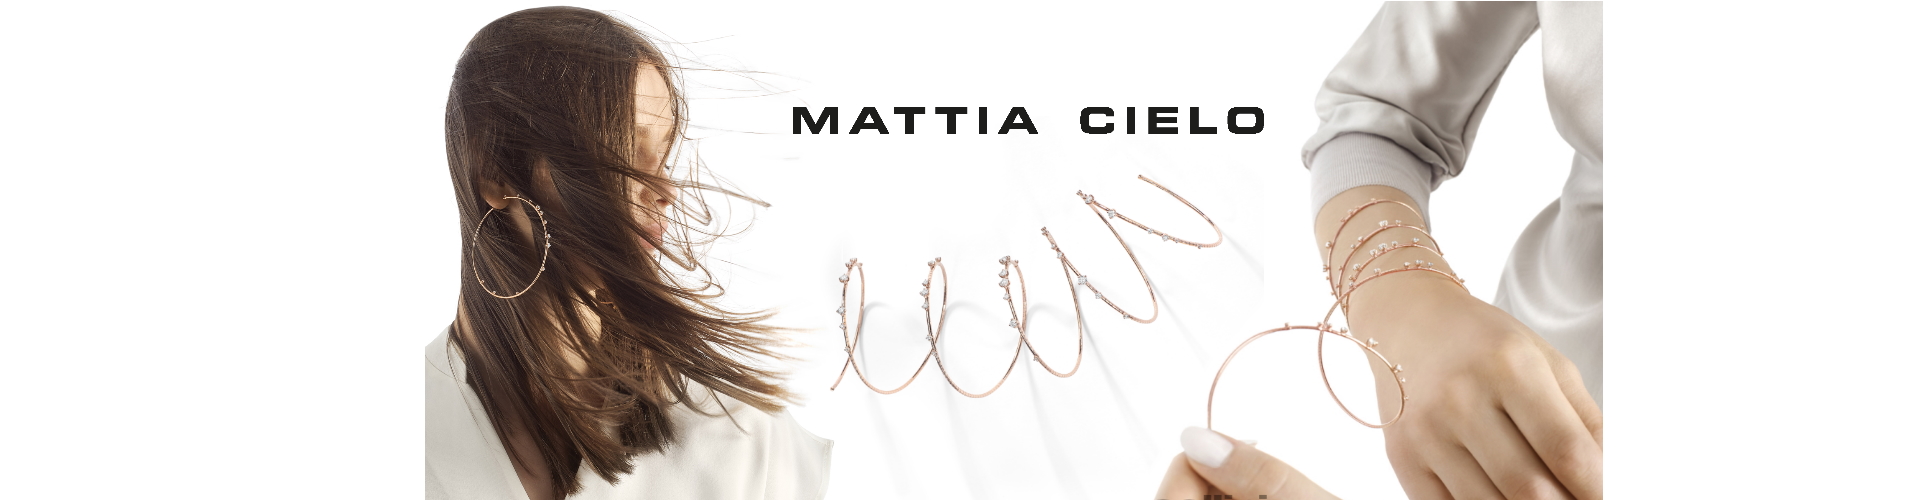 Mattia Cielo Home Page Slider